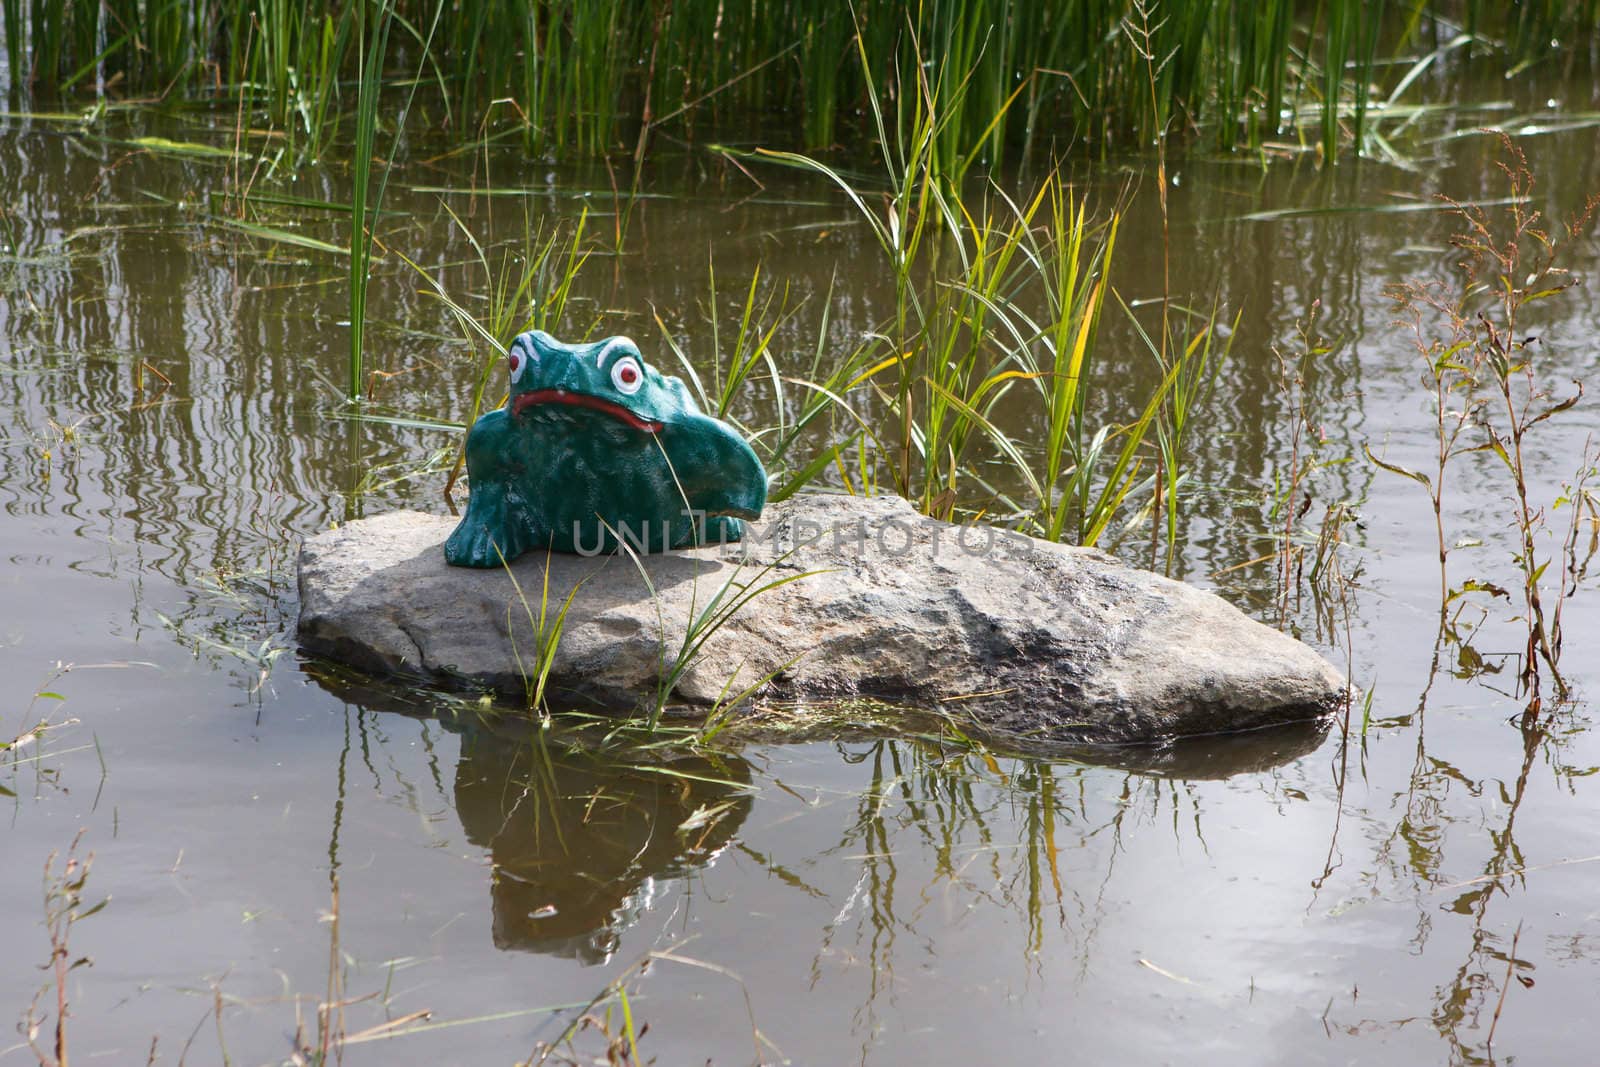 Ceramic Frog Gaurding the Swamp by Coffee999